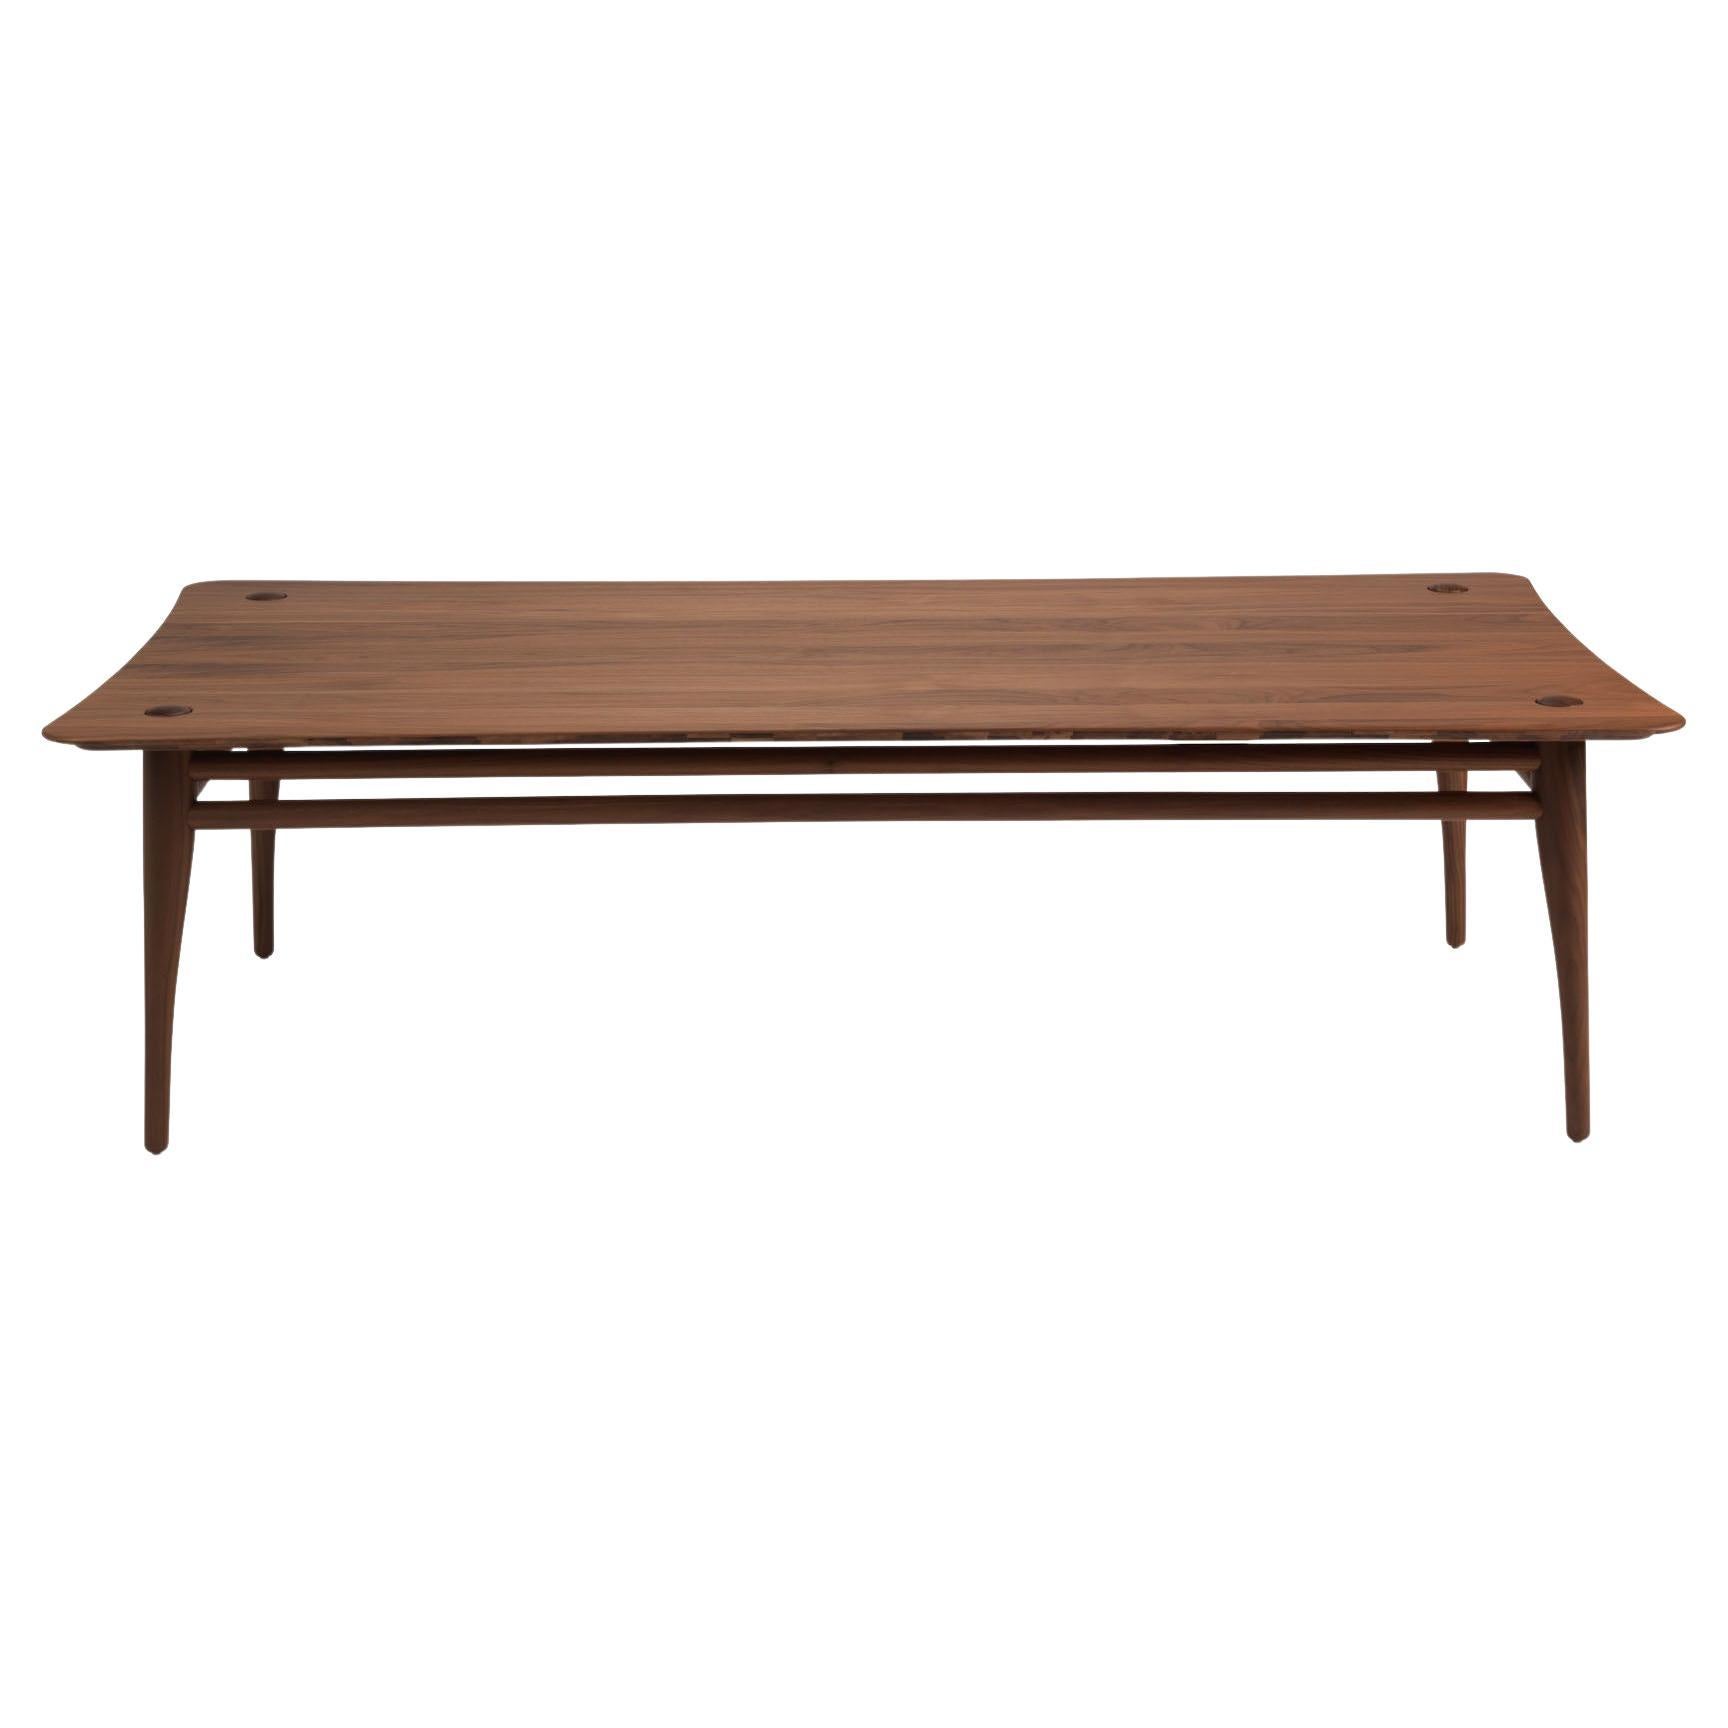 Revised Chilgrove - table basse en noyer massif - rectangle 120x60cm en vente